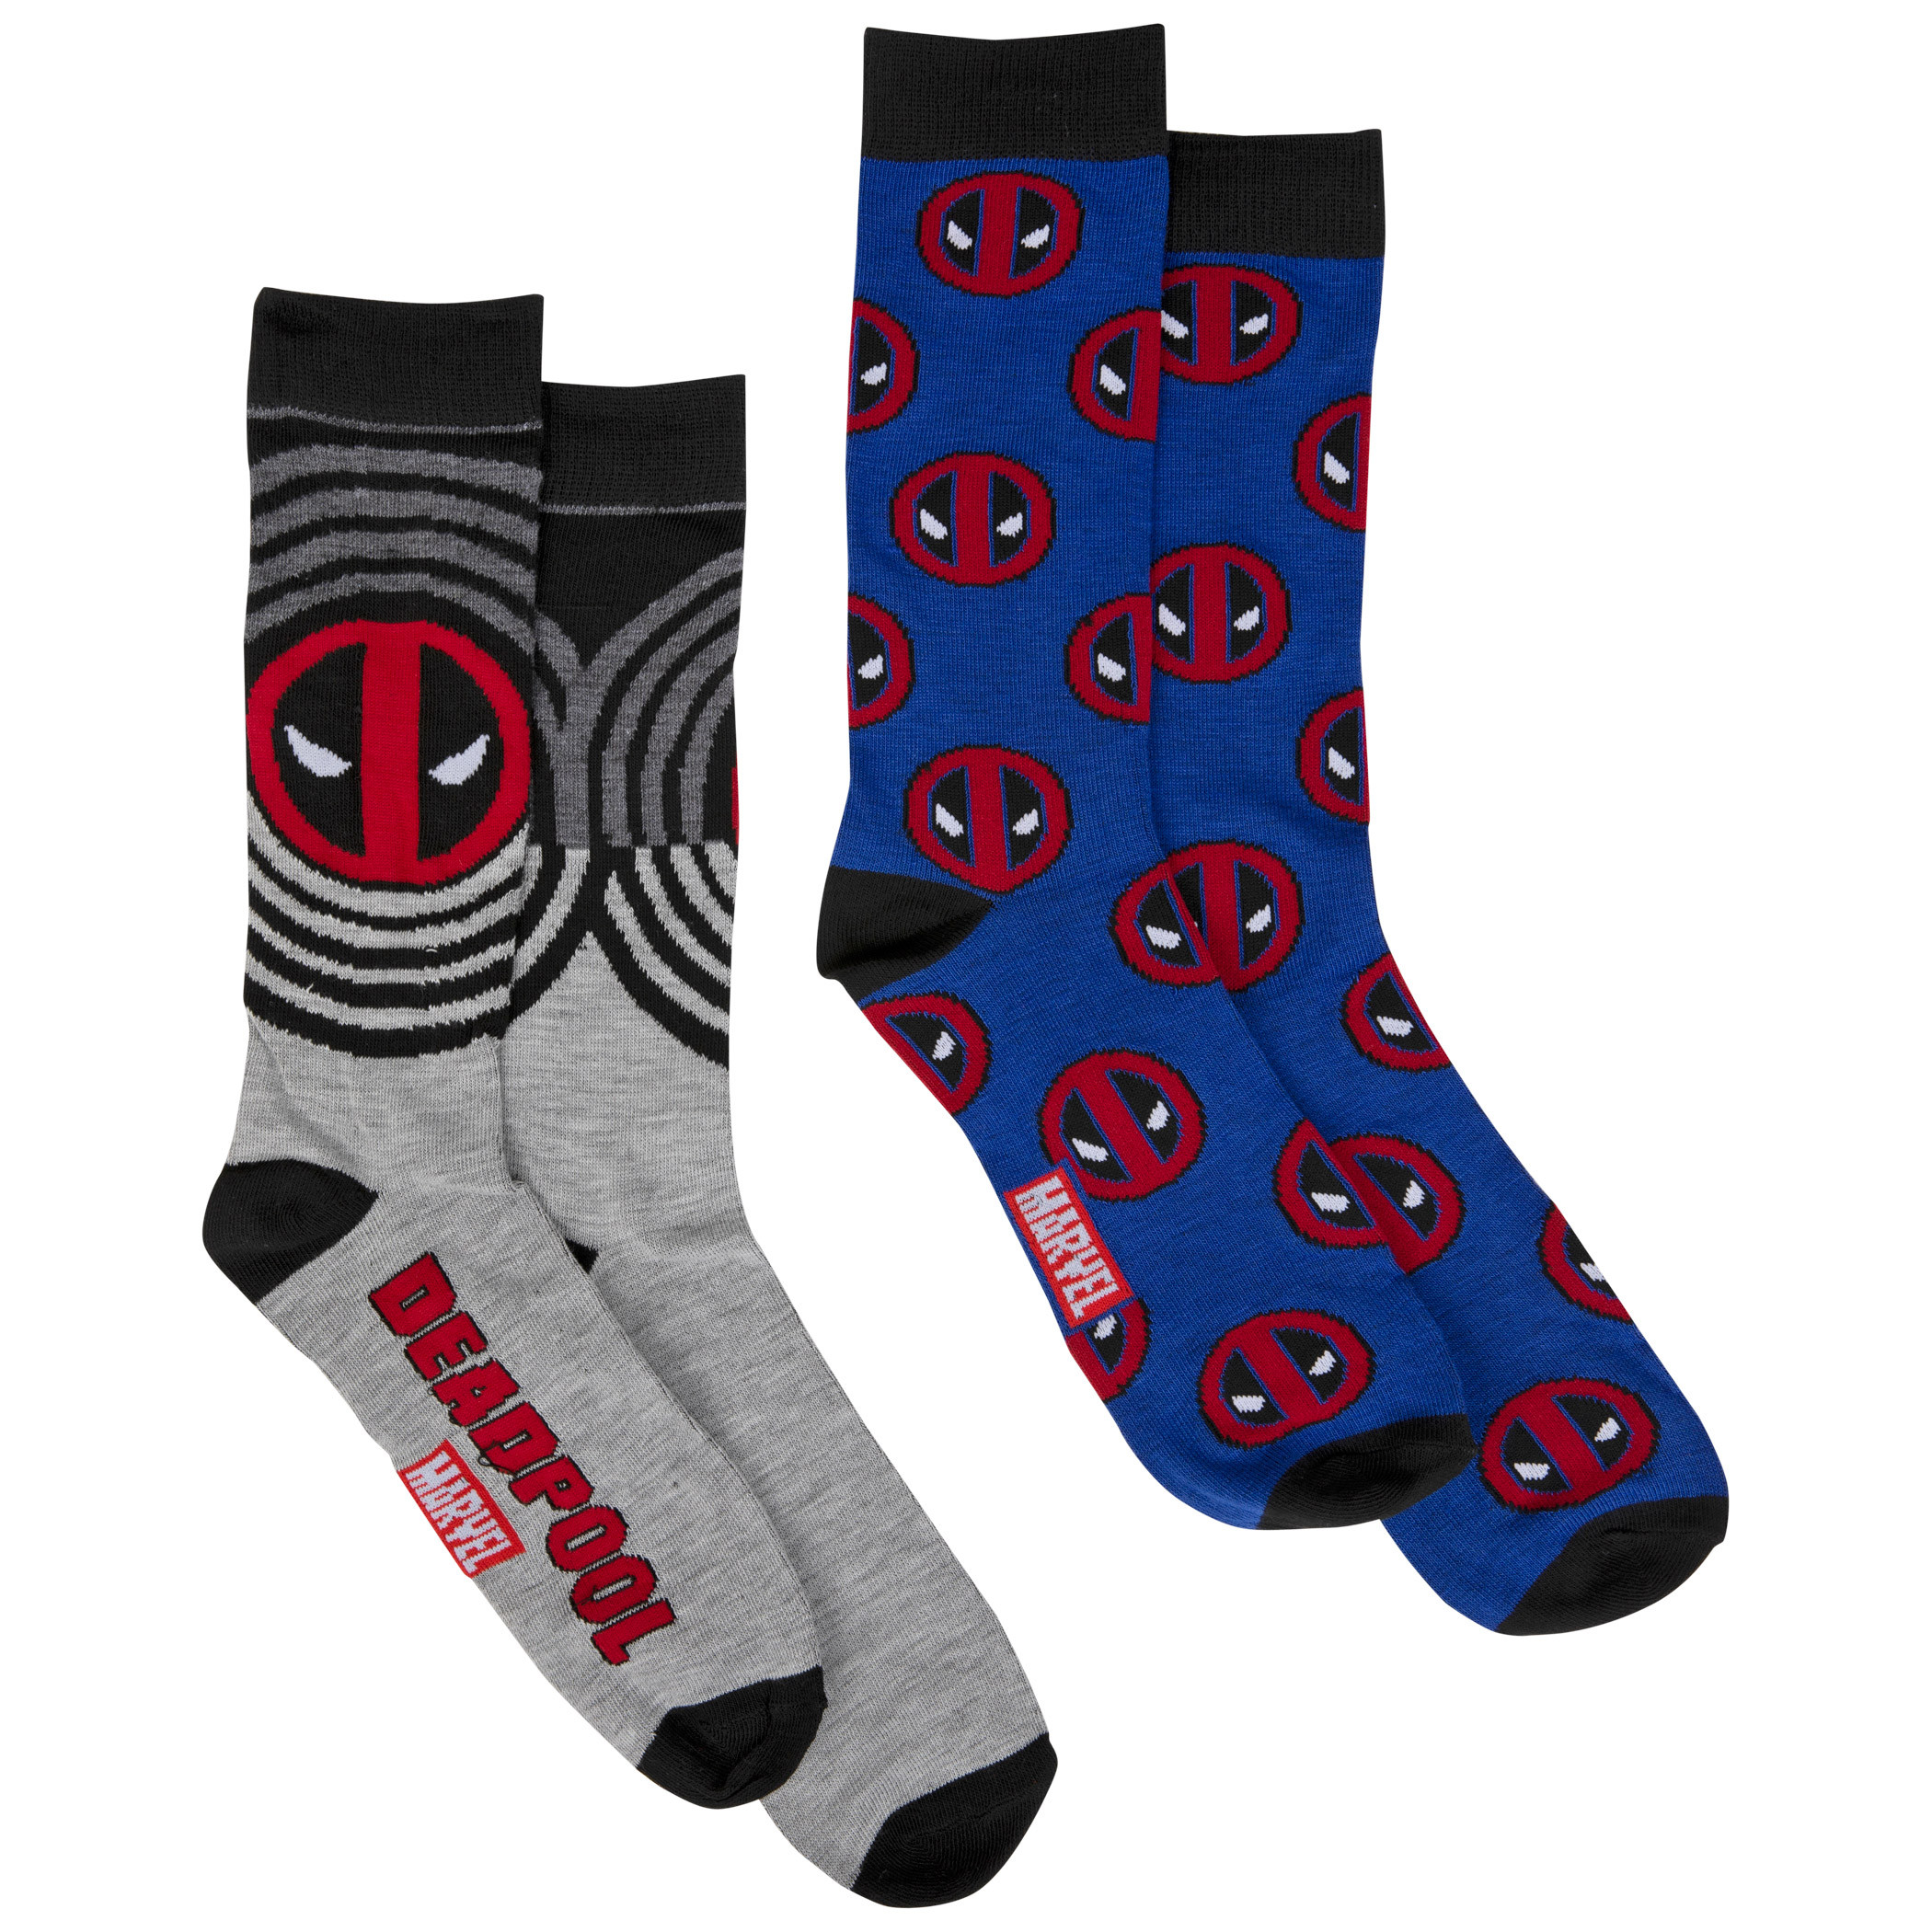 Deadpool Logos 2-Pair Pack of Crew Socks